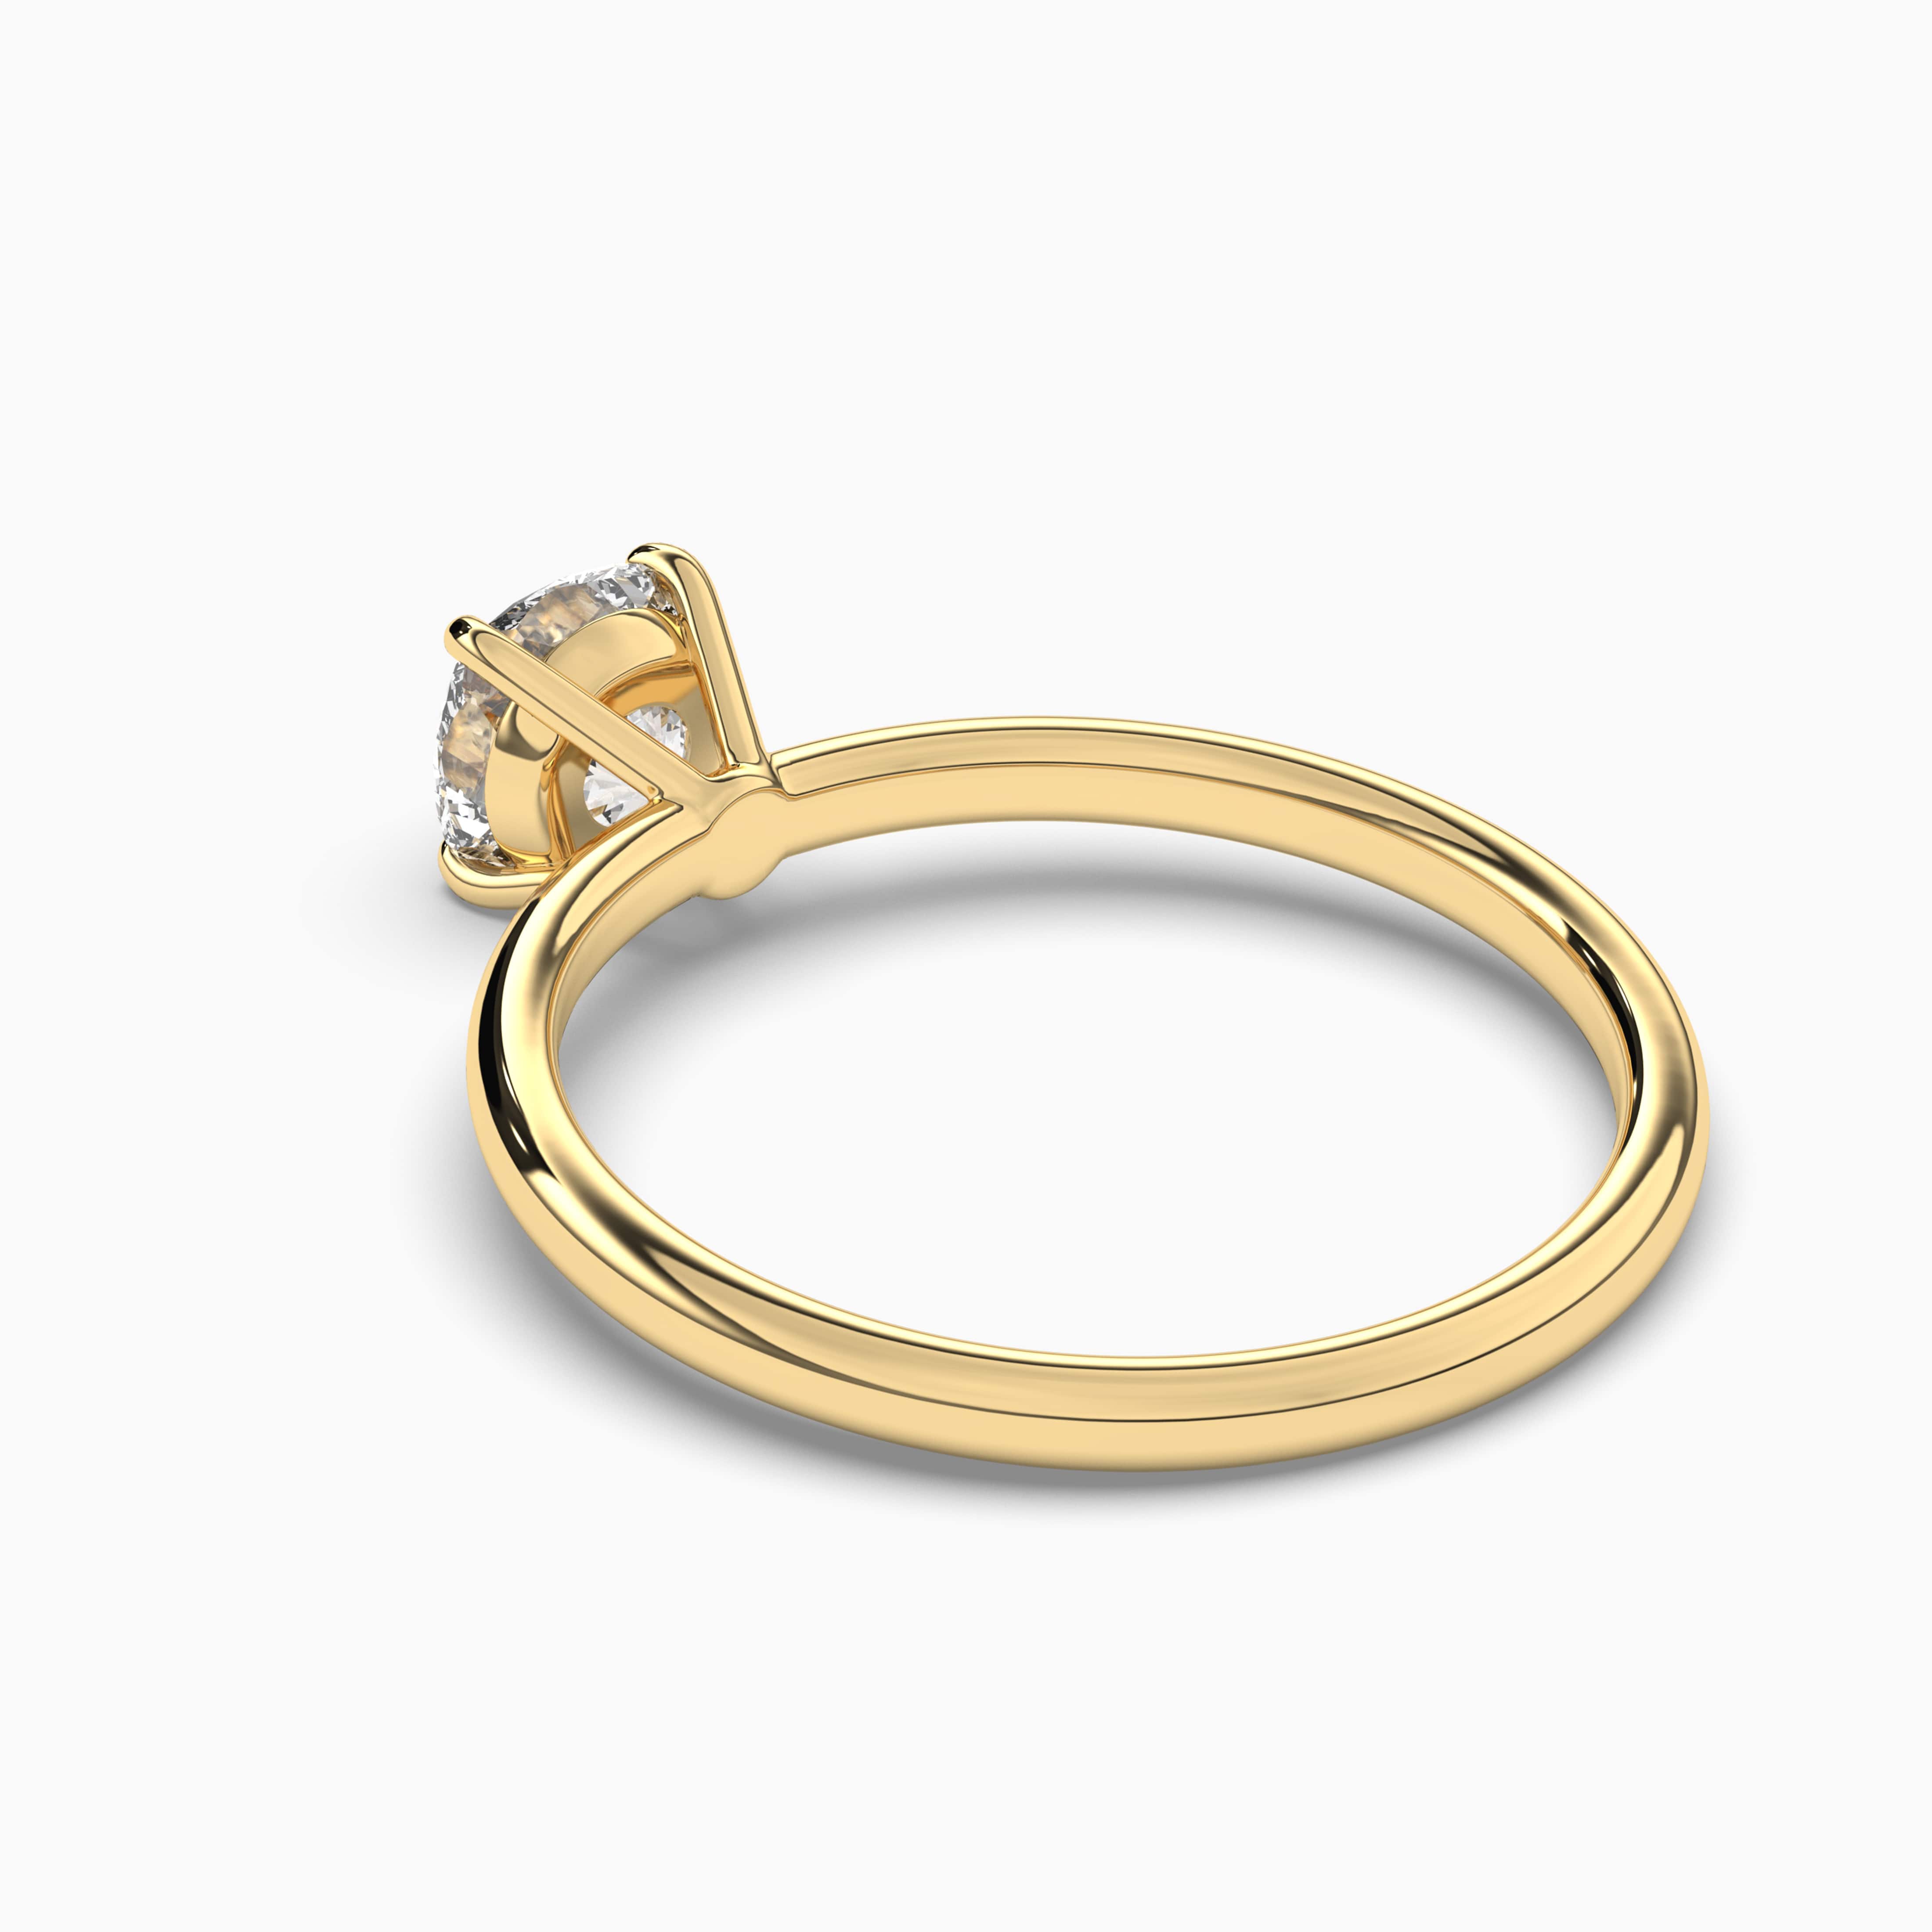 Solitaire Cushion cut diamond engagement ring